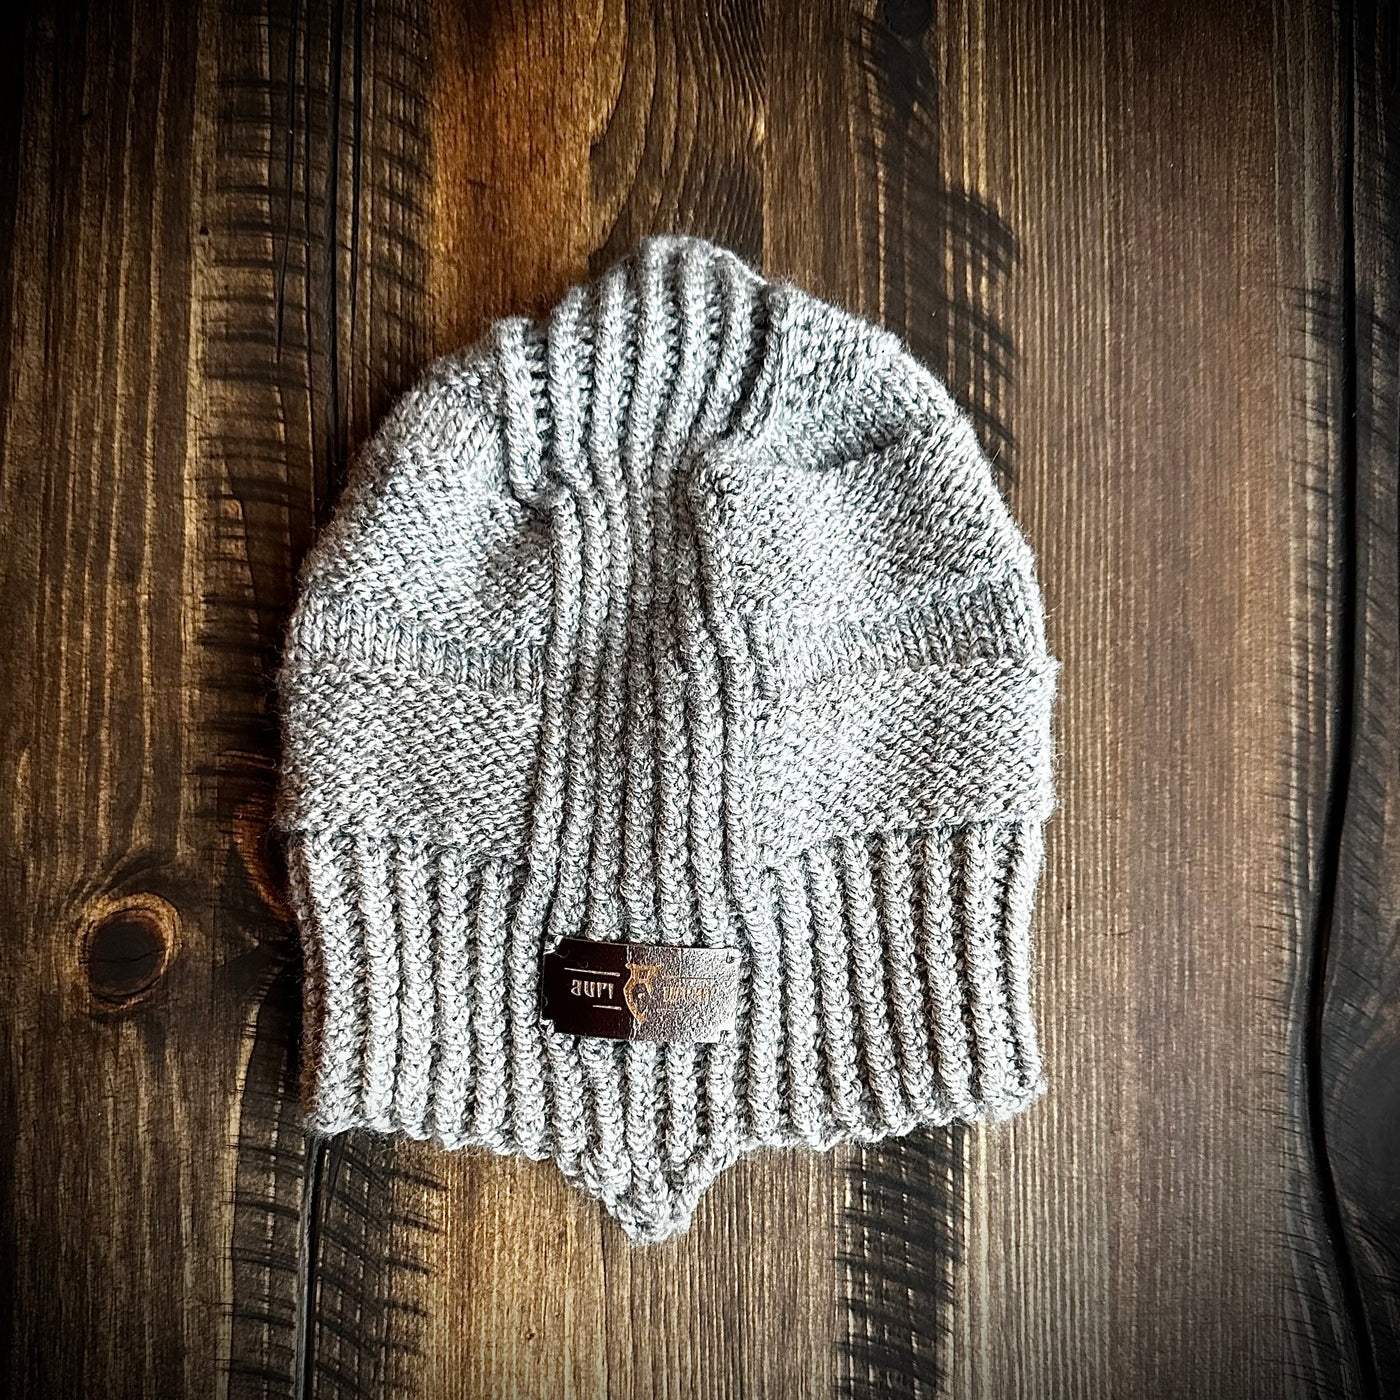 Handmade knitted dreamy grey baby beanie